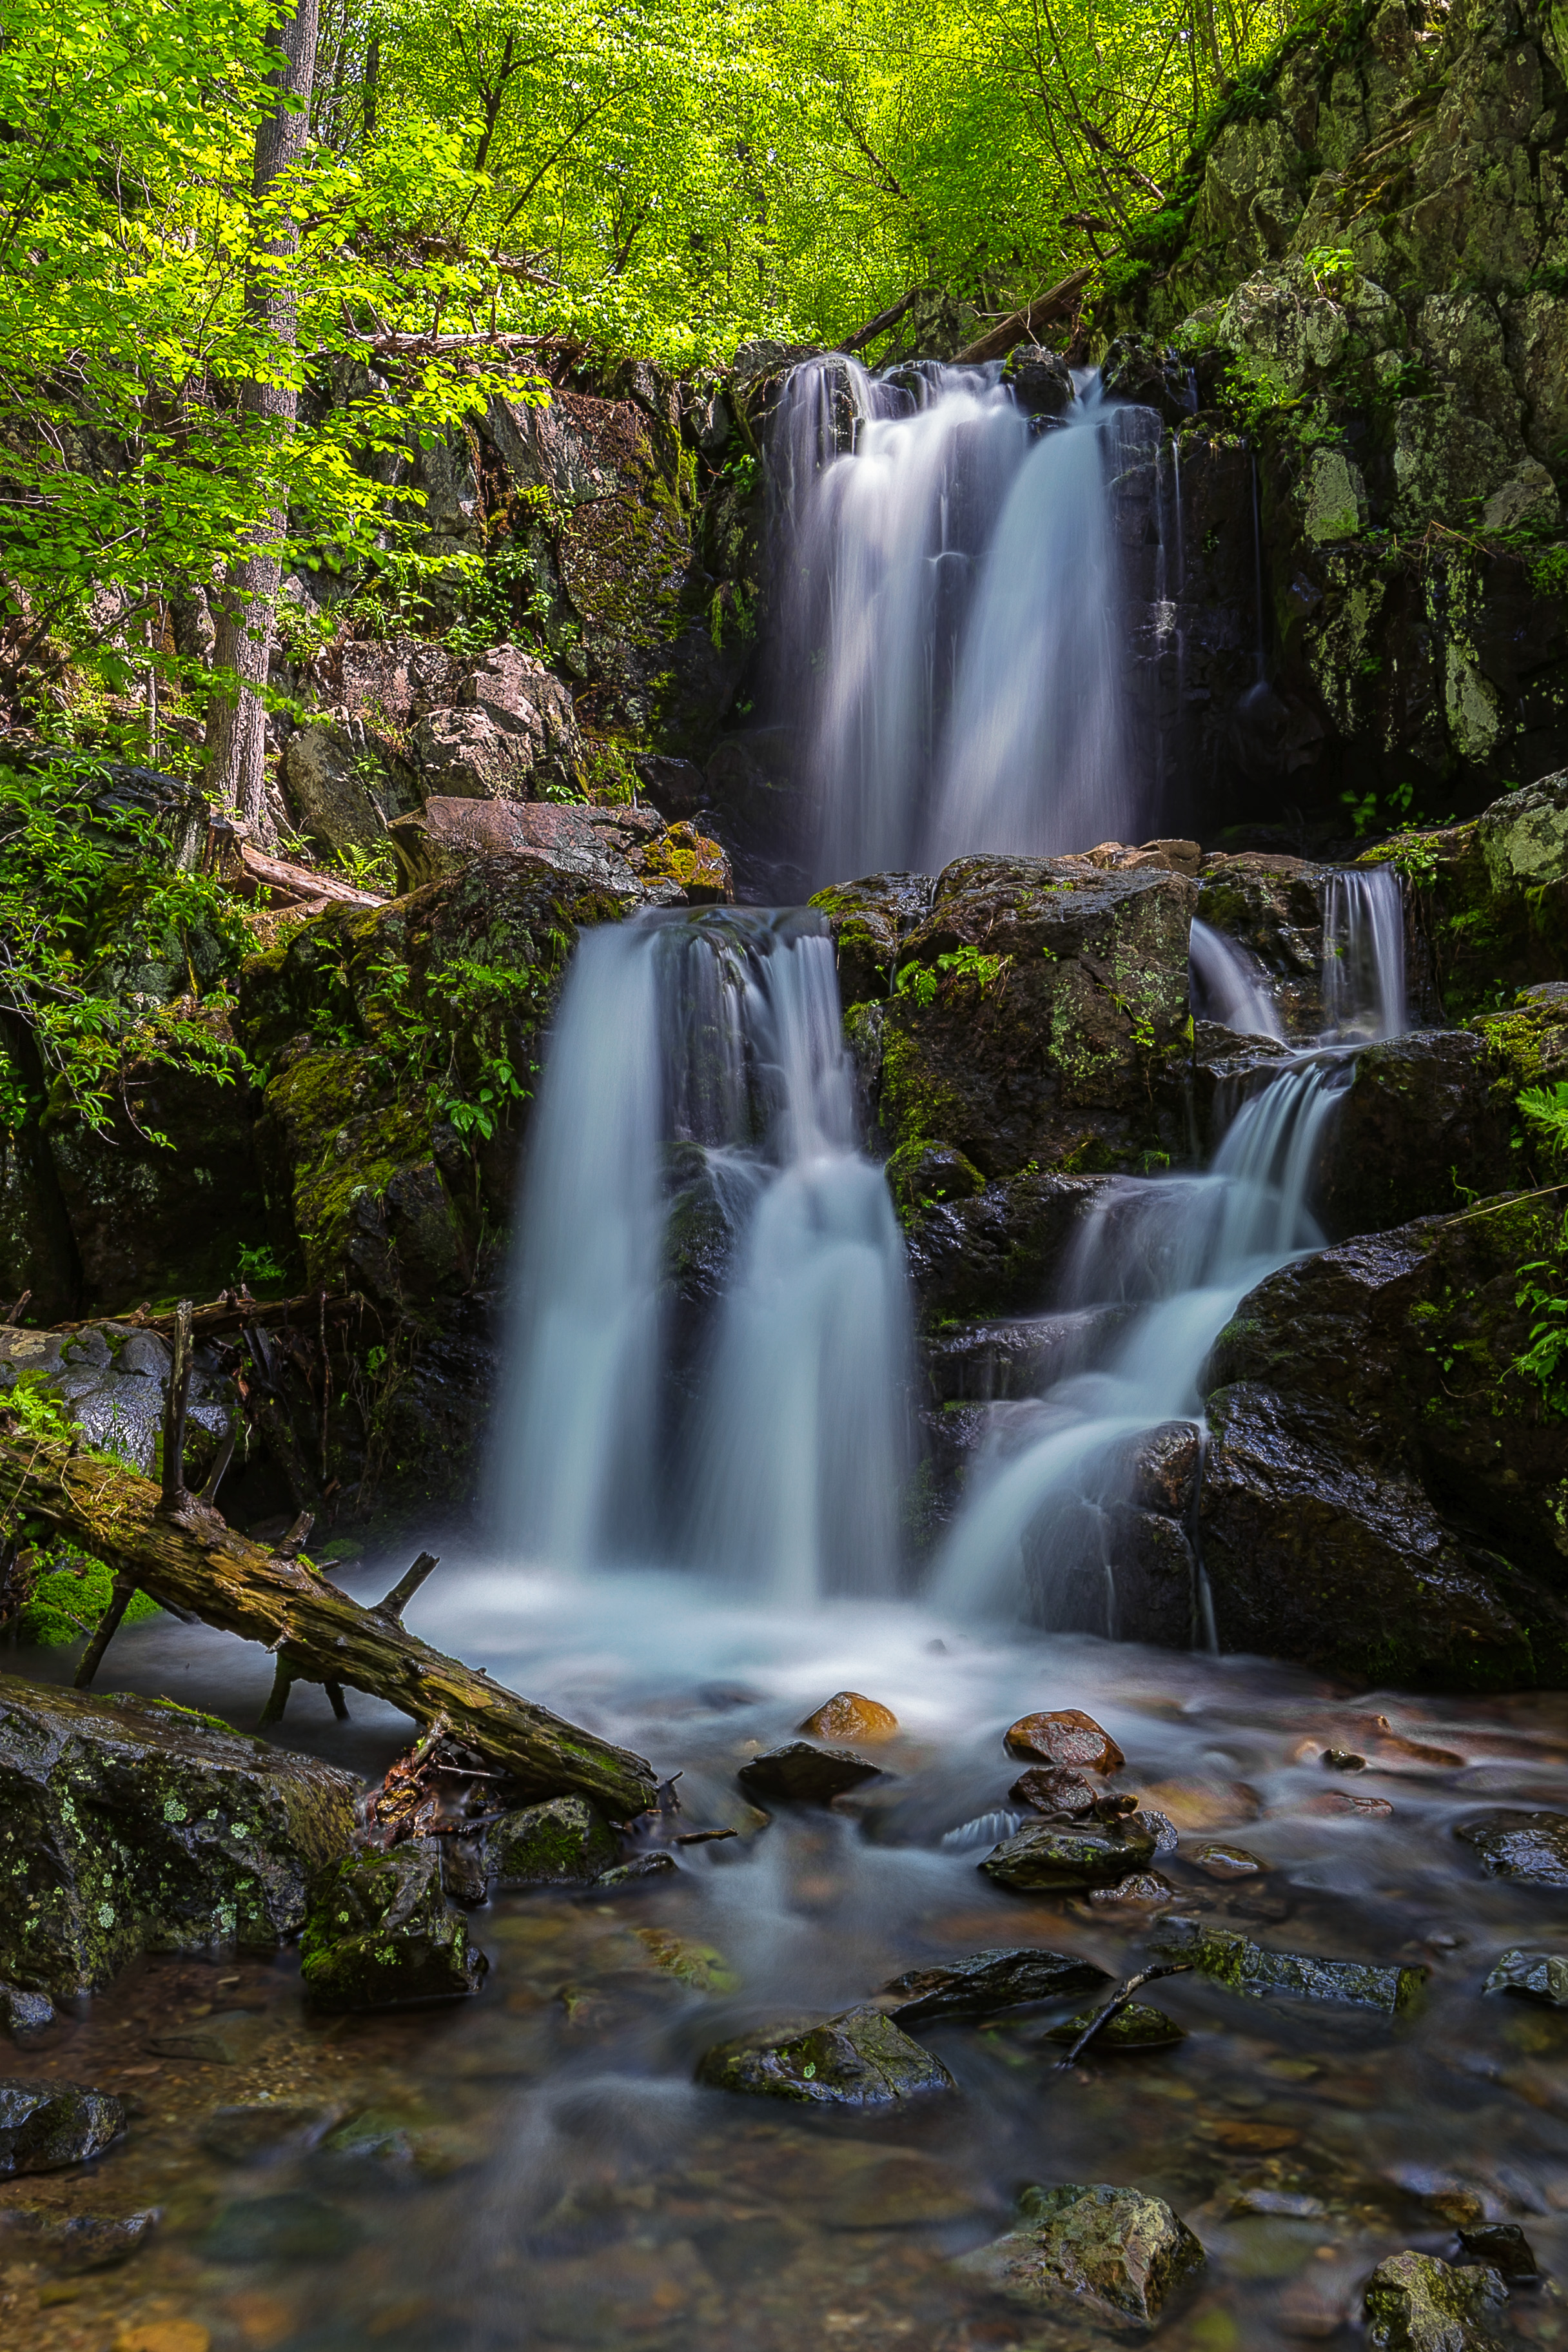 Doyles River Falls in Shenandoah National Park. Photo by Lukas Schlagenhauf via Flickr.